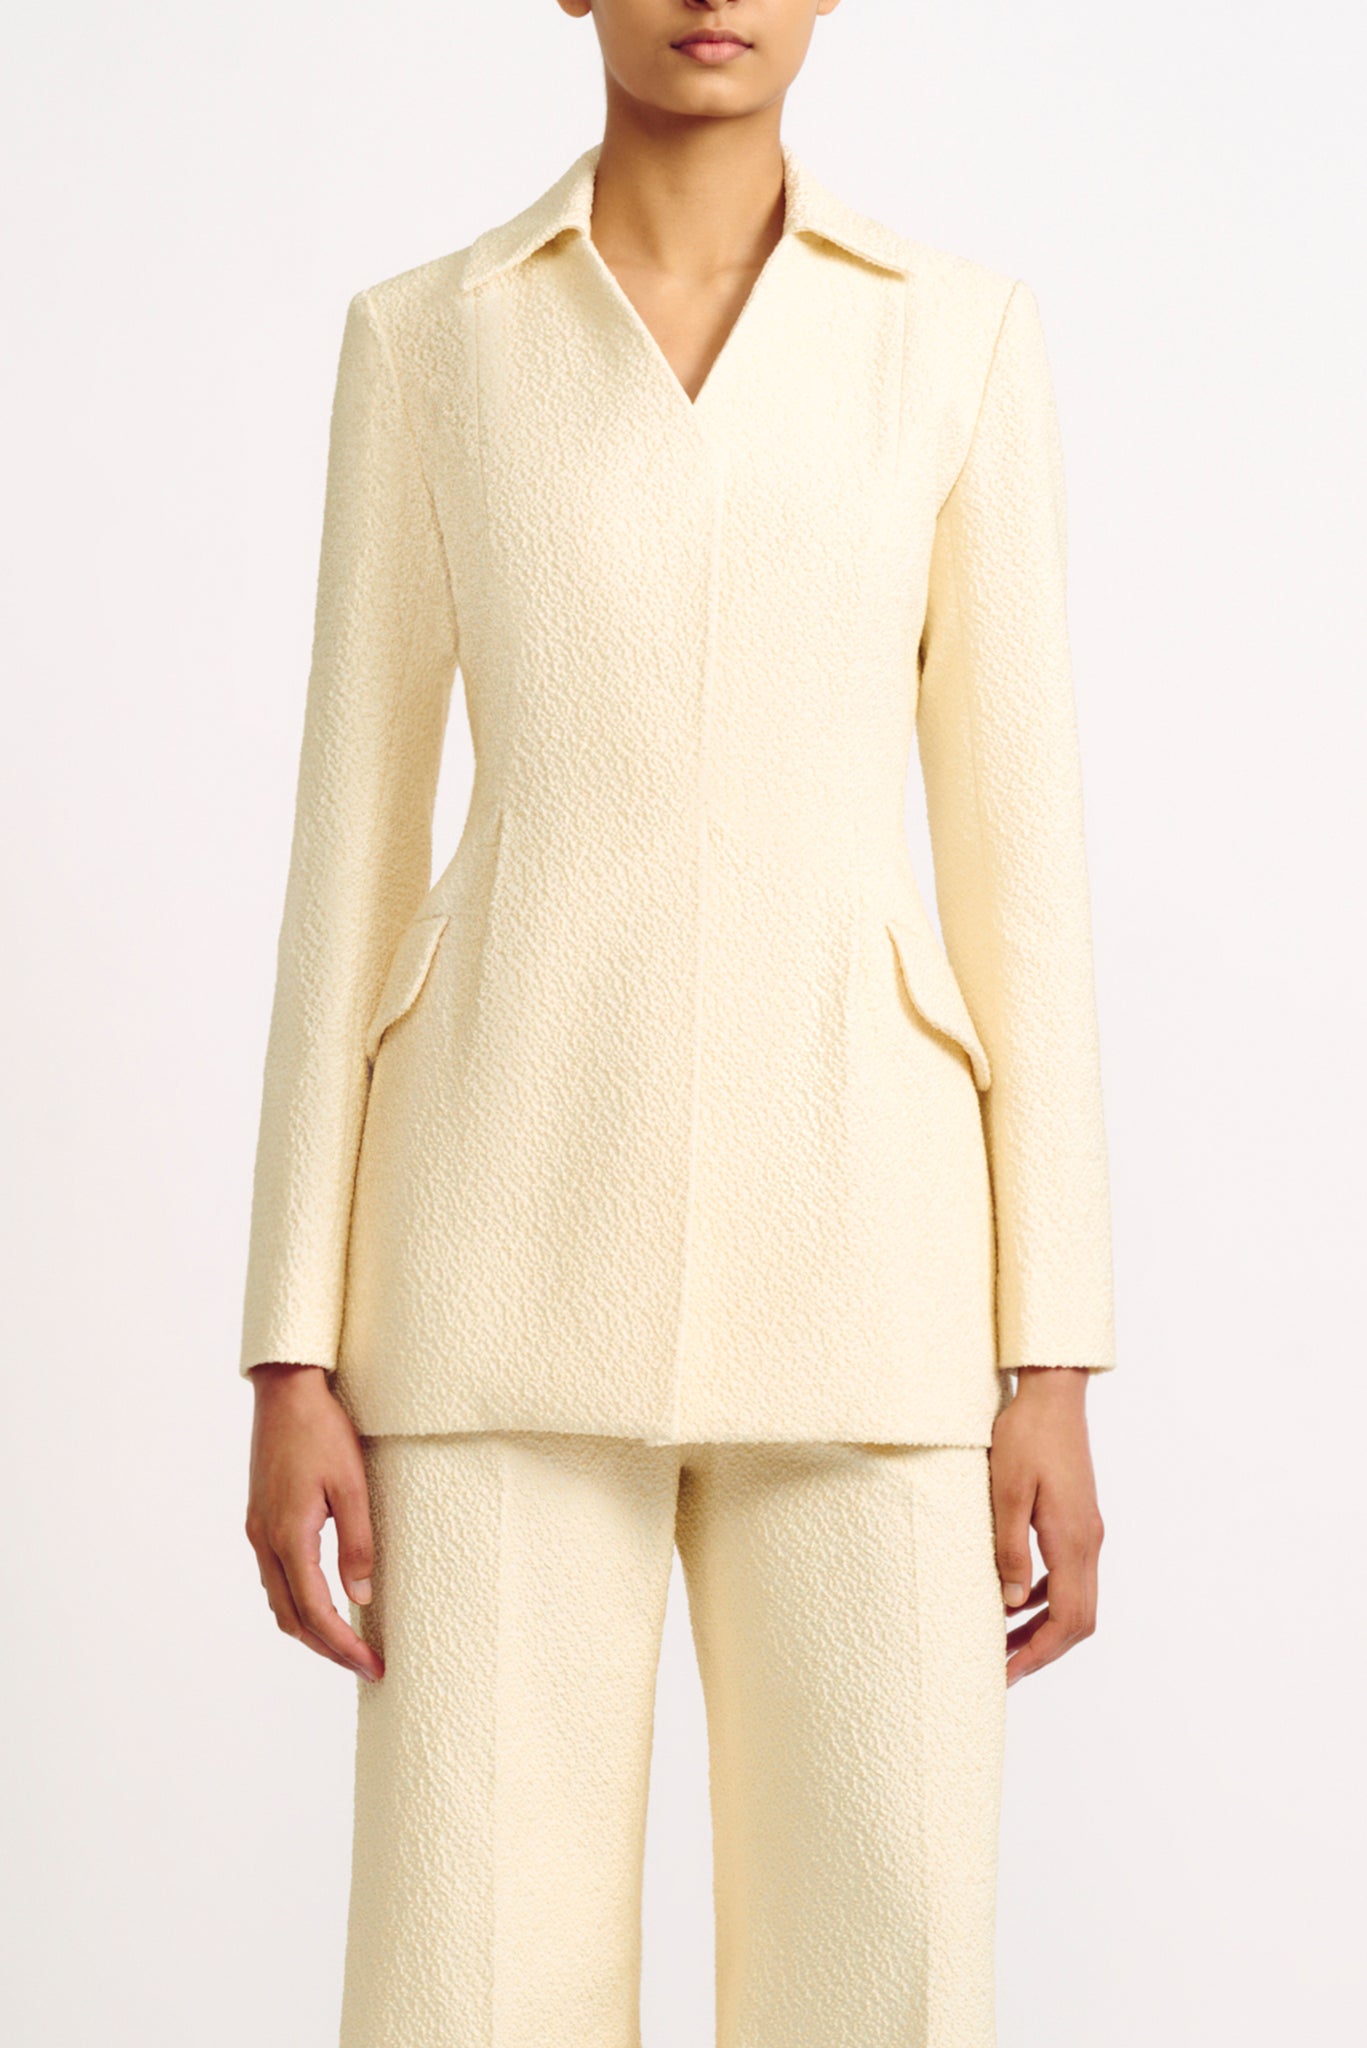 Aideen Ivory Cotton Boucle Jacket | Emilia Wickstead